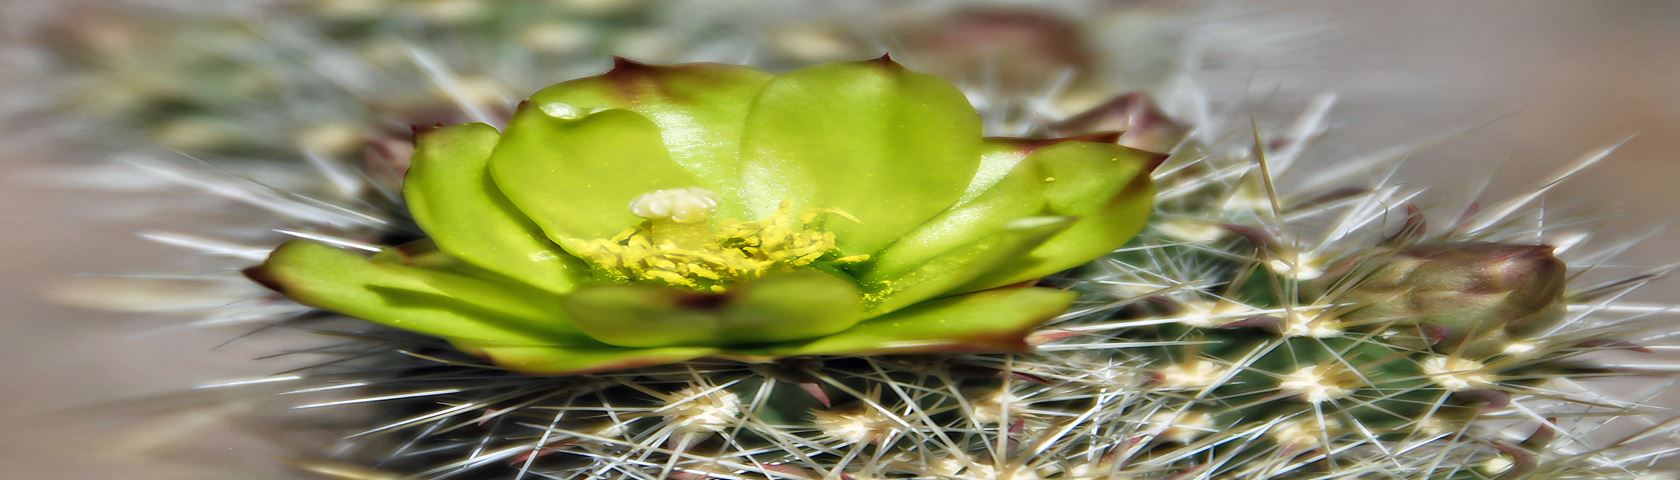 Silver Cholla Cactus Flower